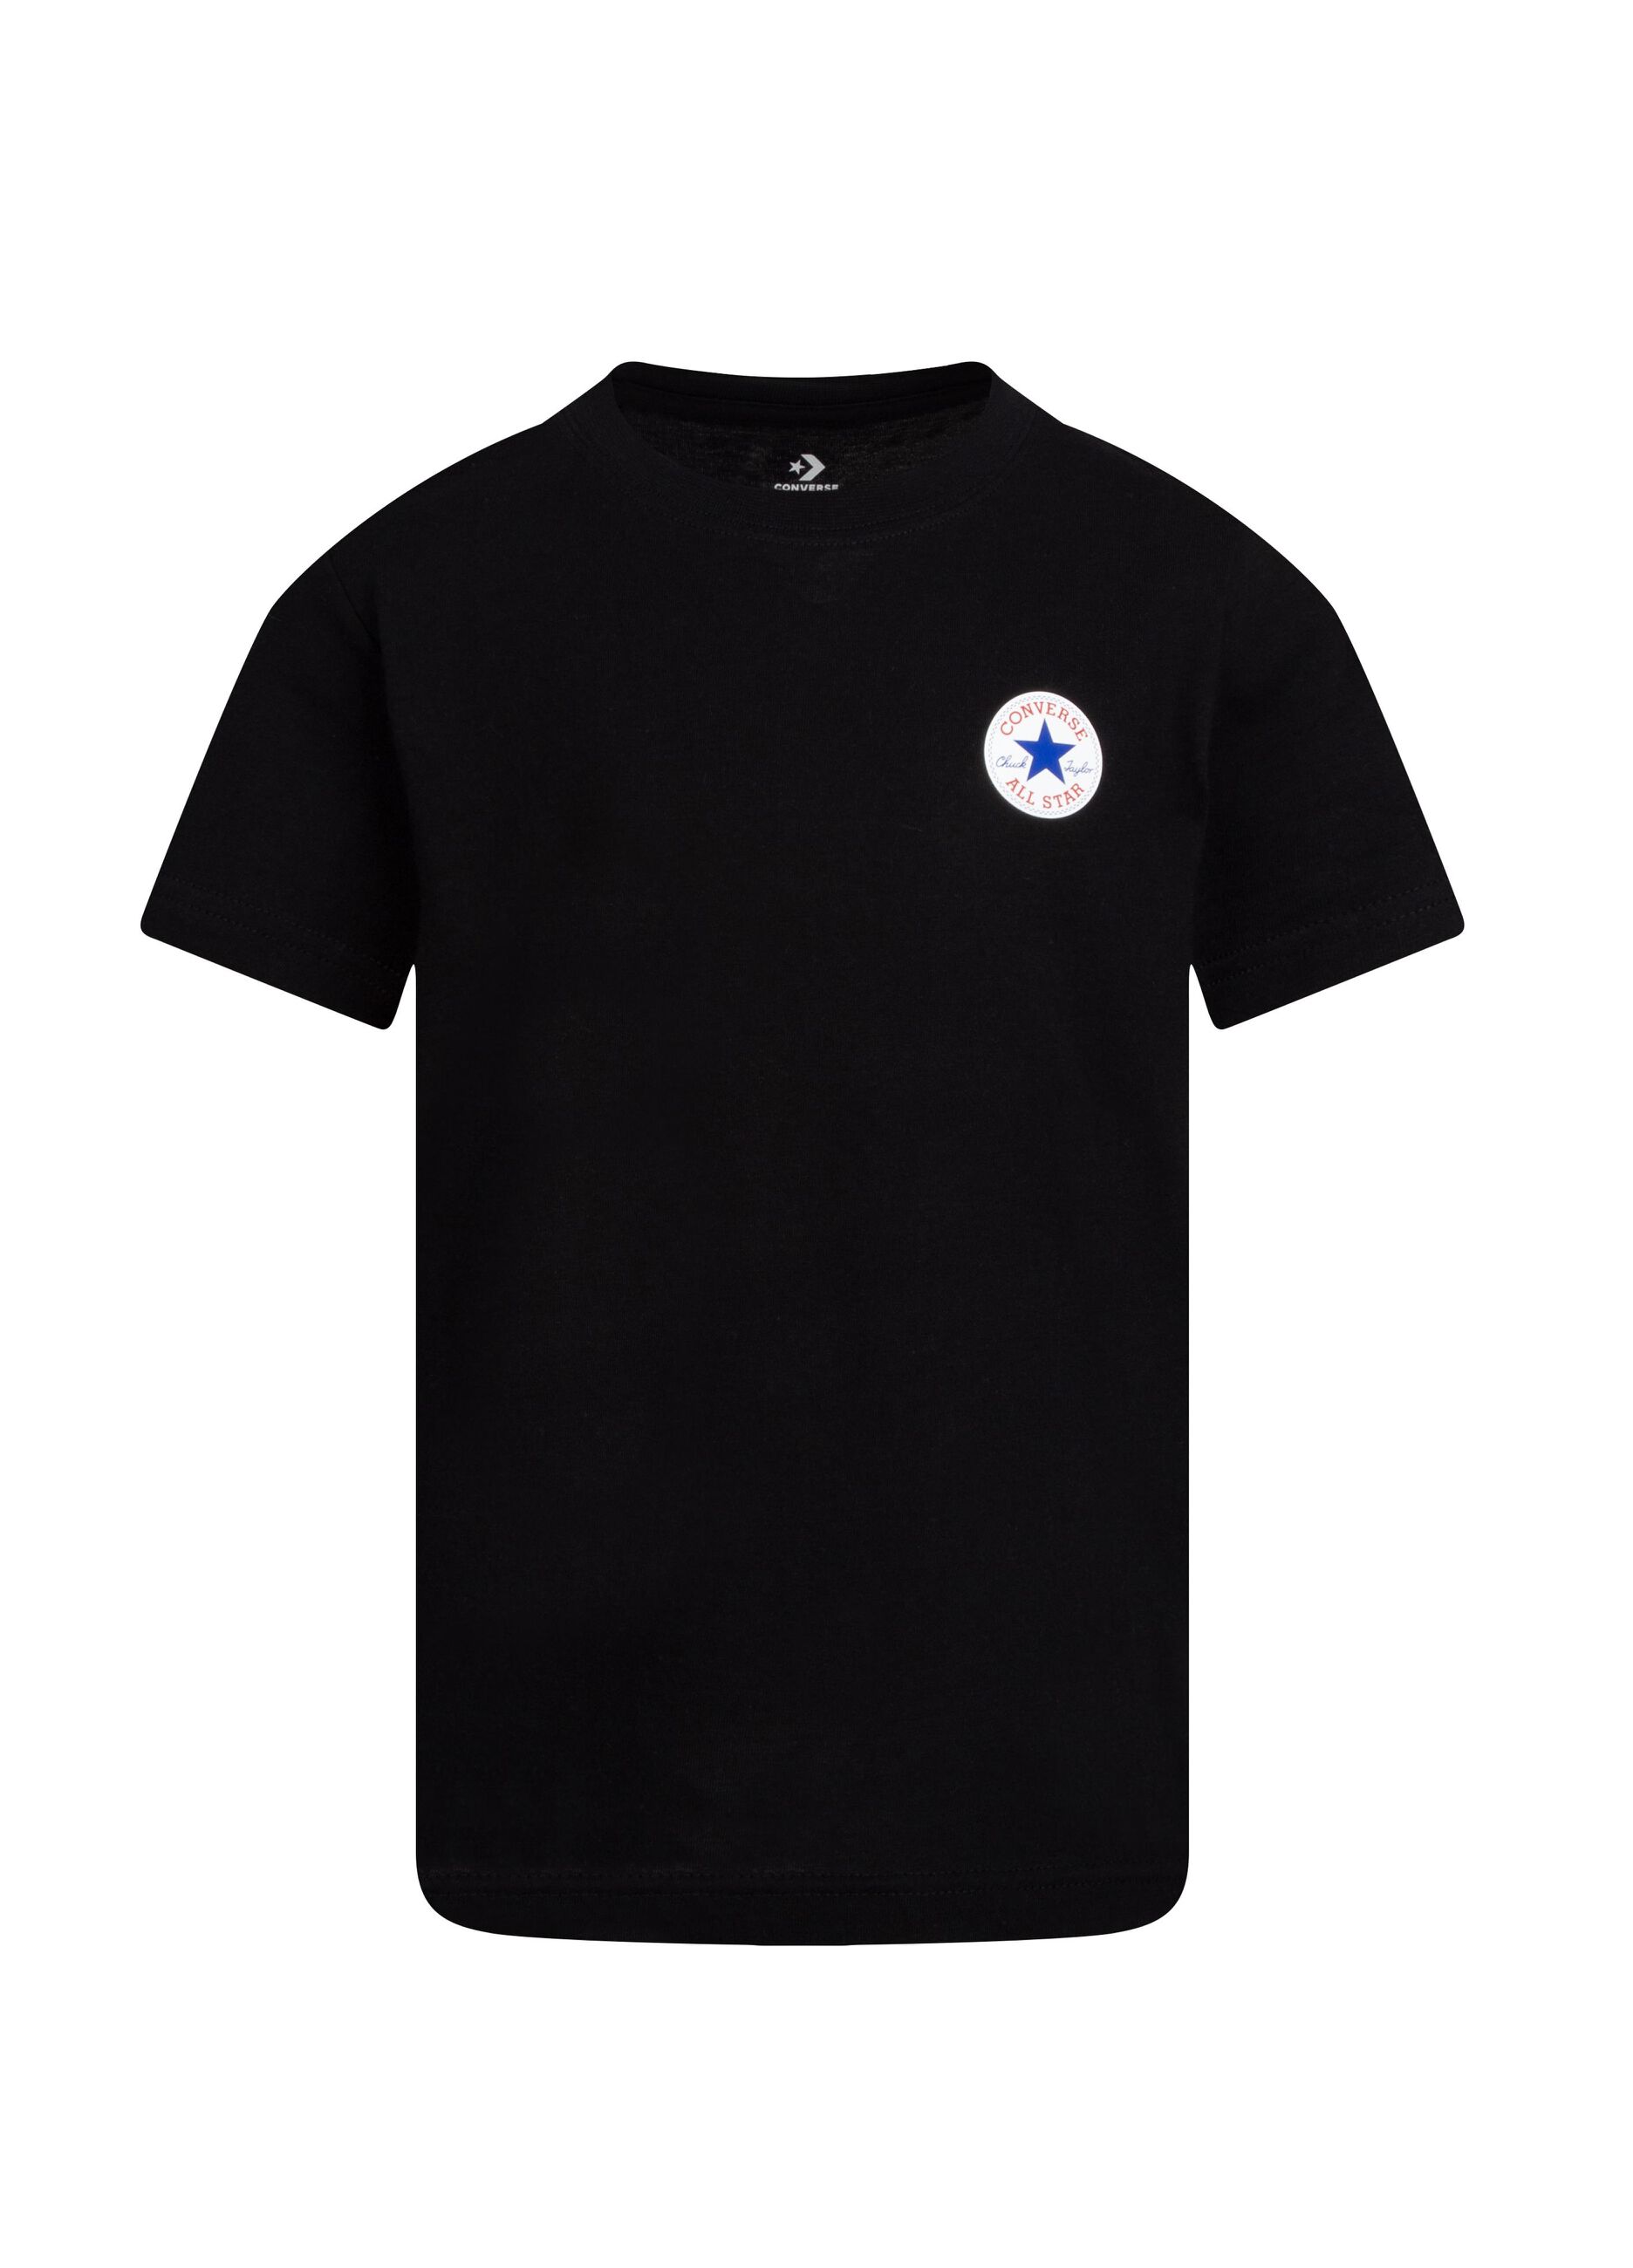 Cotton T-shirt with Chuck Taylor logo print